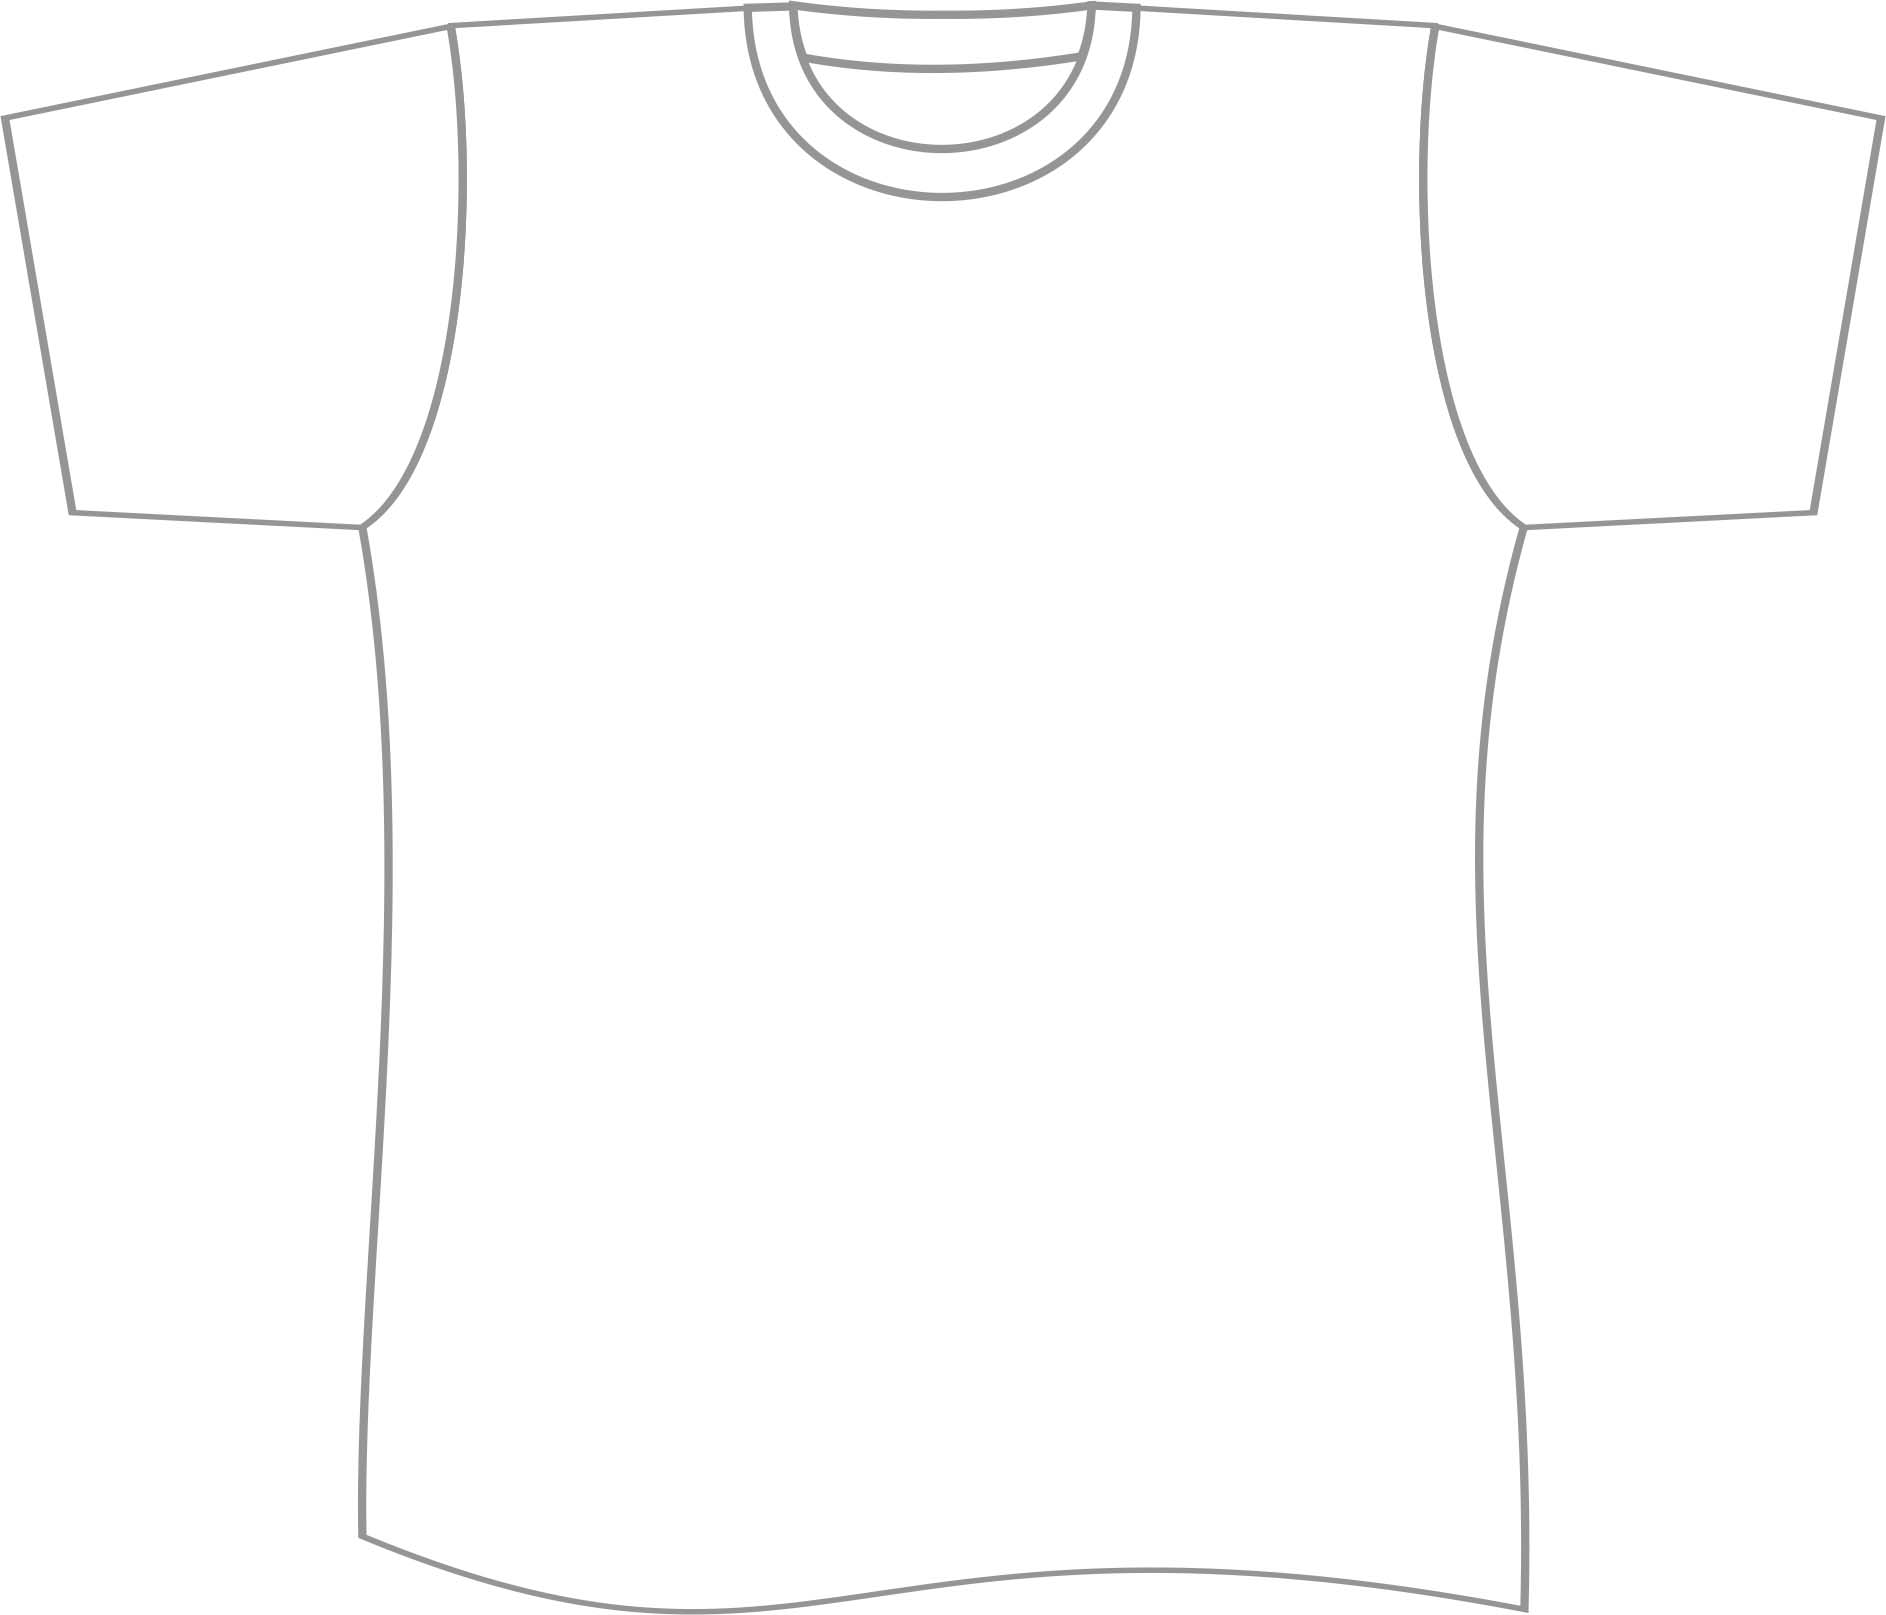 plain white t shirts - images - fashion365.com